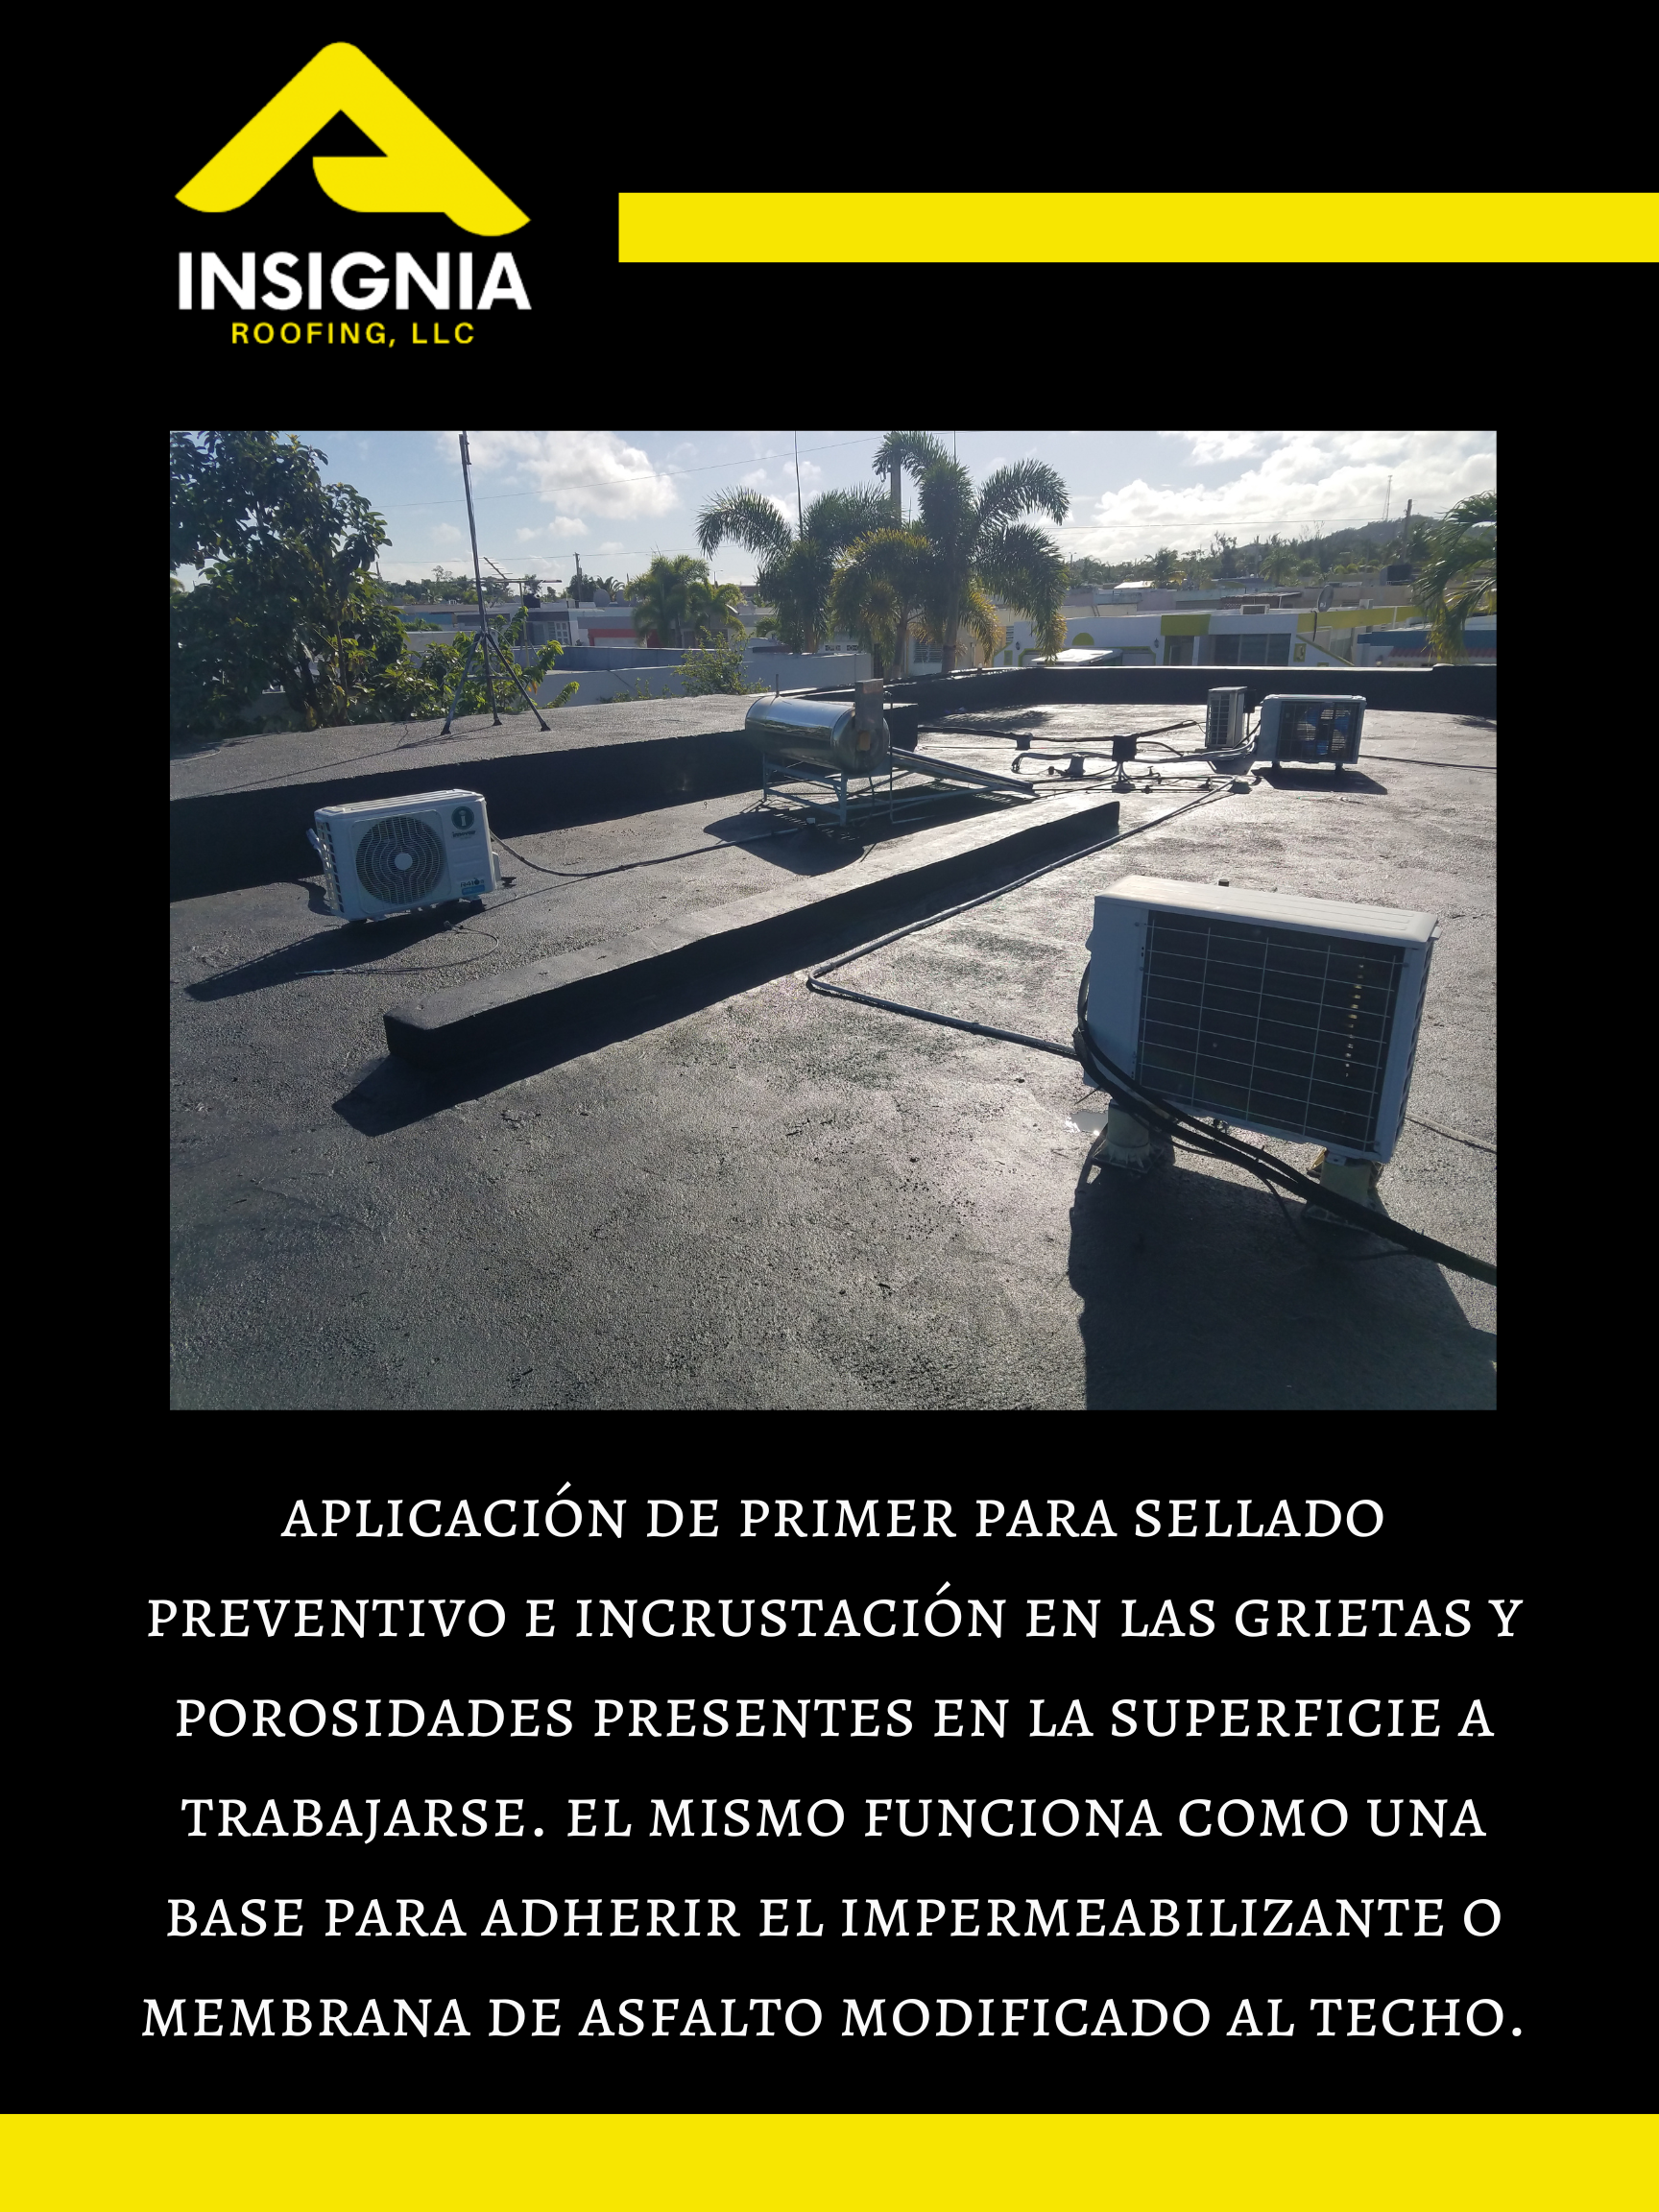 Insignia Roofing, LLC - Foto 5.0 (Servicios)